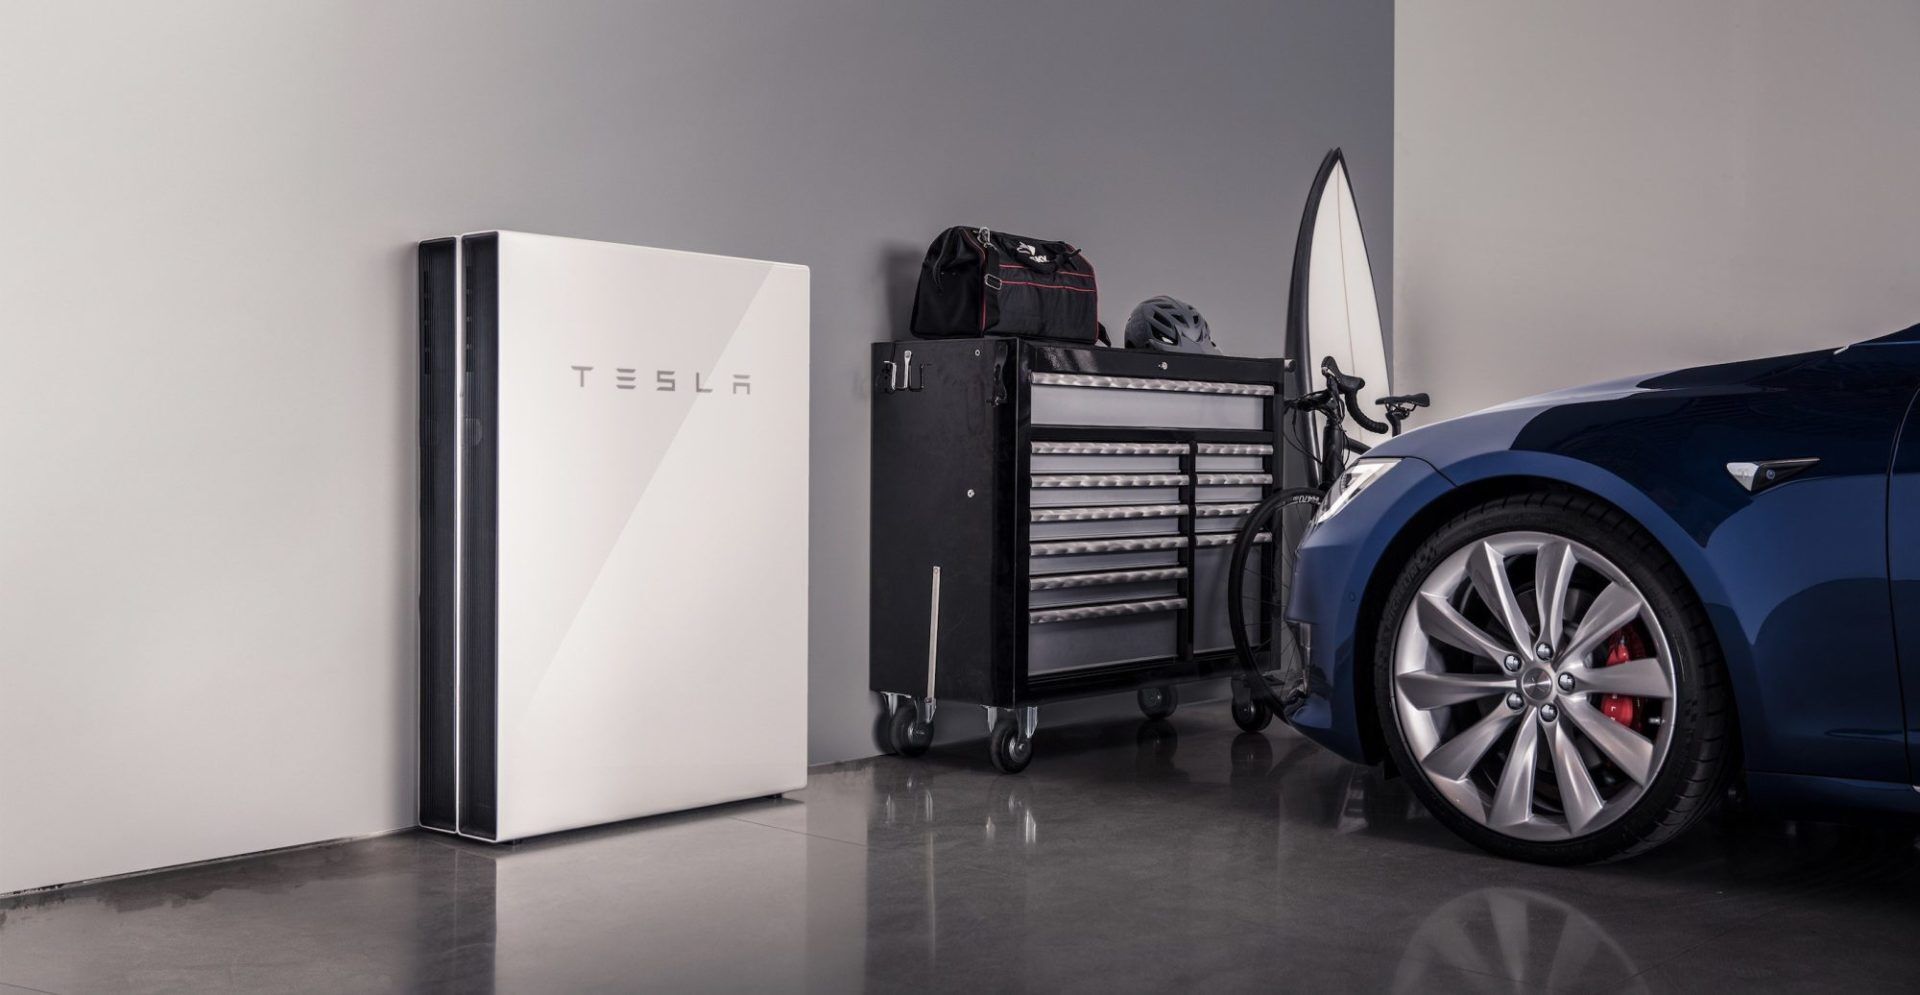 Tesla Powerwall 2 installed in a garage